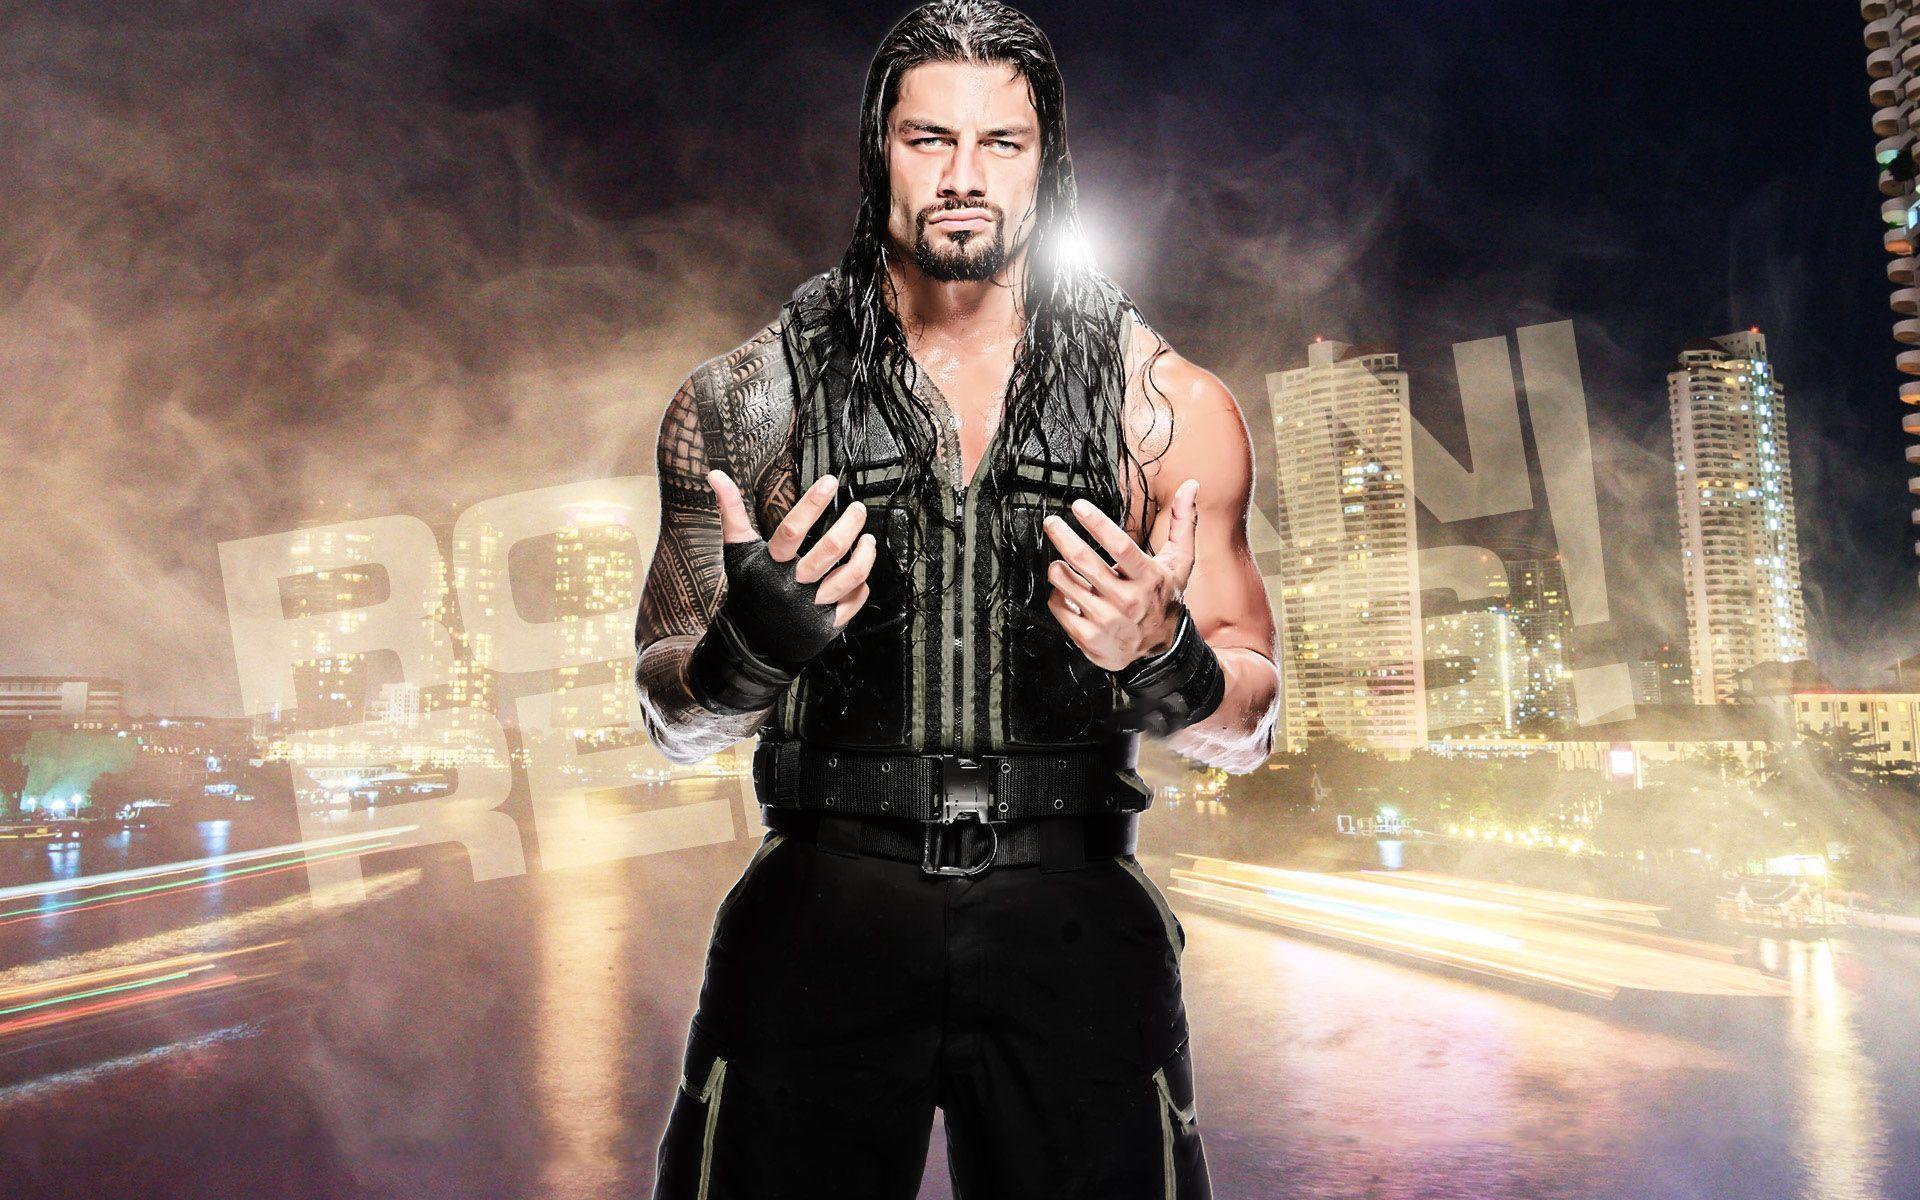 Download WWE Roman Reigns 2016 Wallpaper for Desktop. Most HD